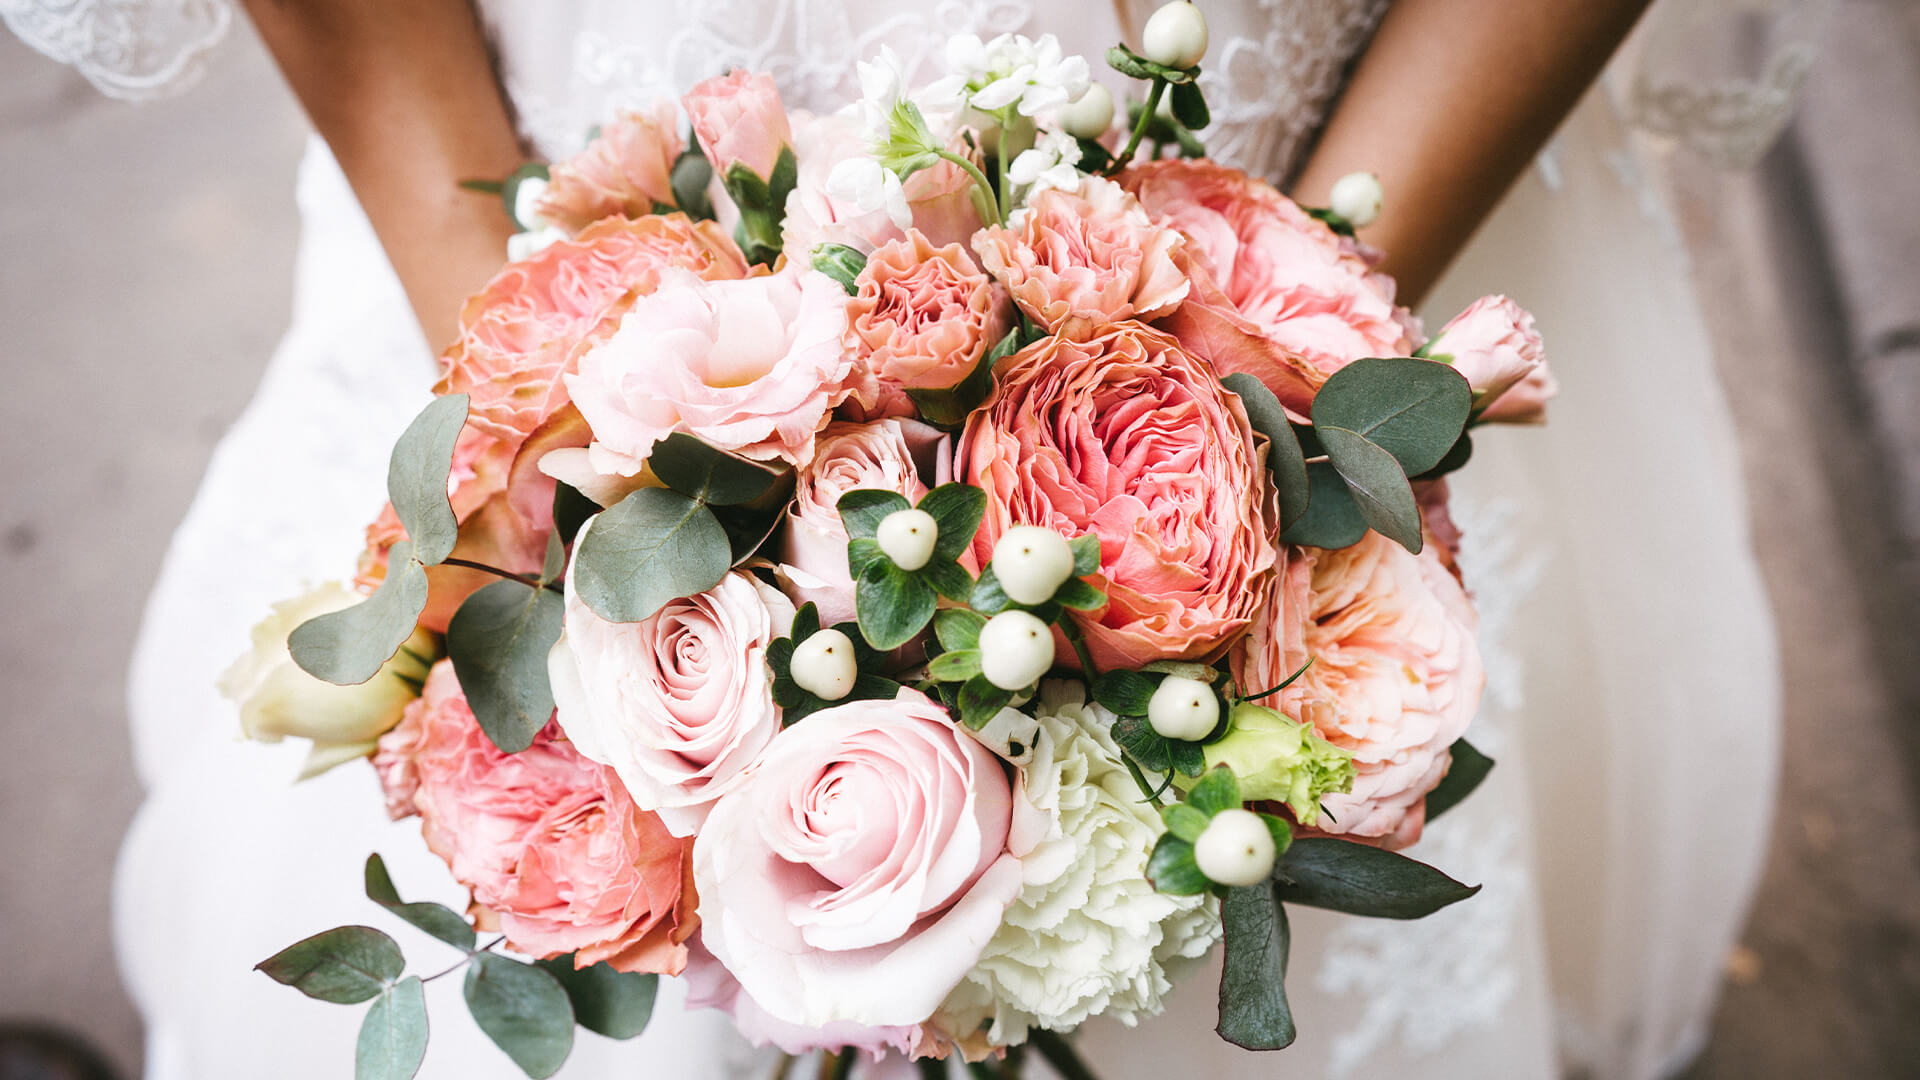 Top 5 Wedding Flower Arrangements Making Waves in 2023